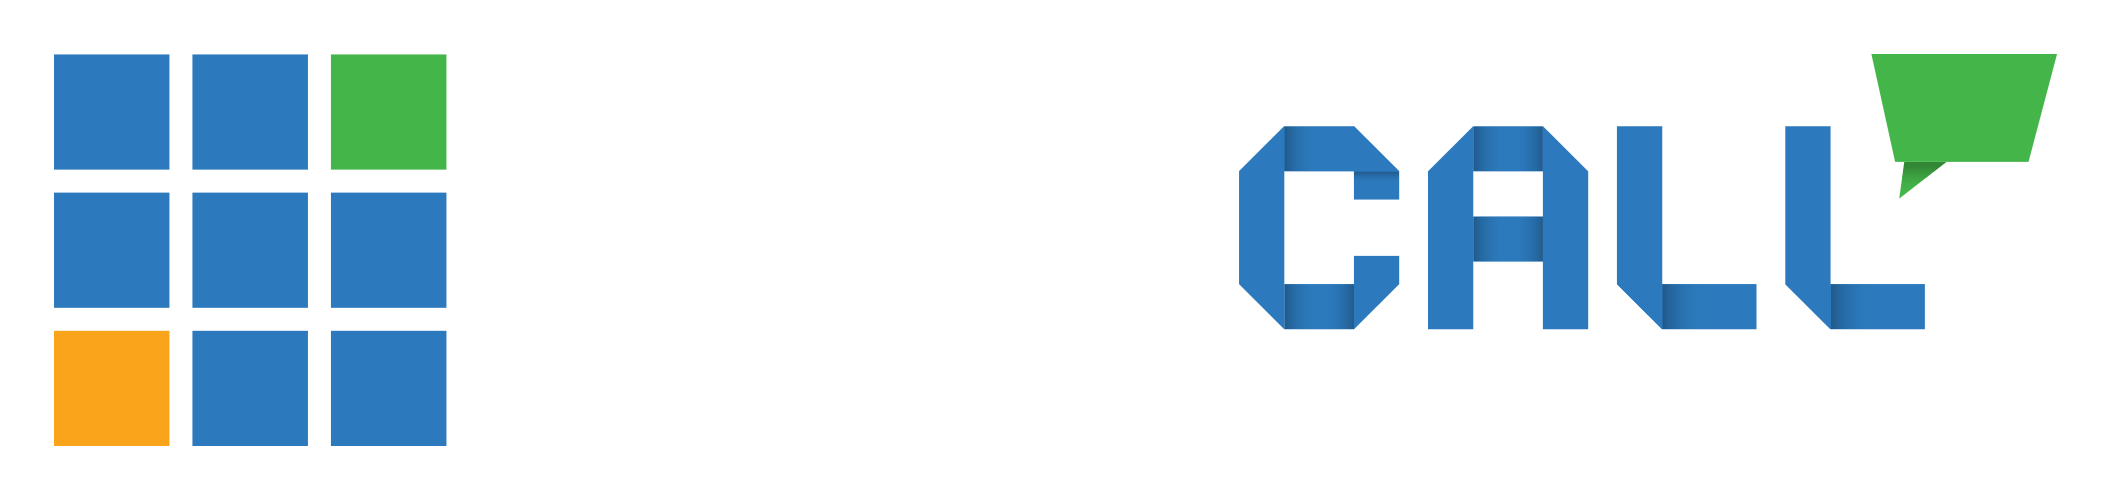 Give Us A Call Logo - vMix Logos | vMix